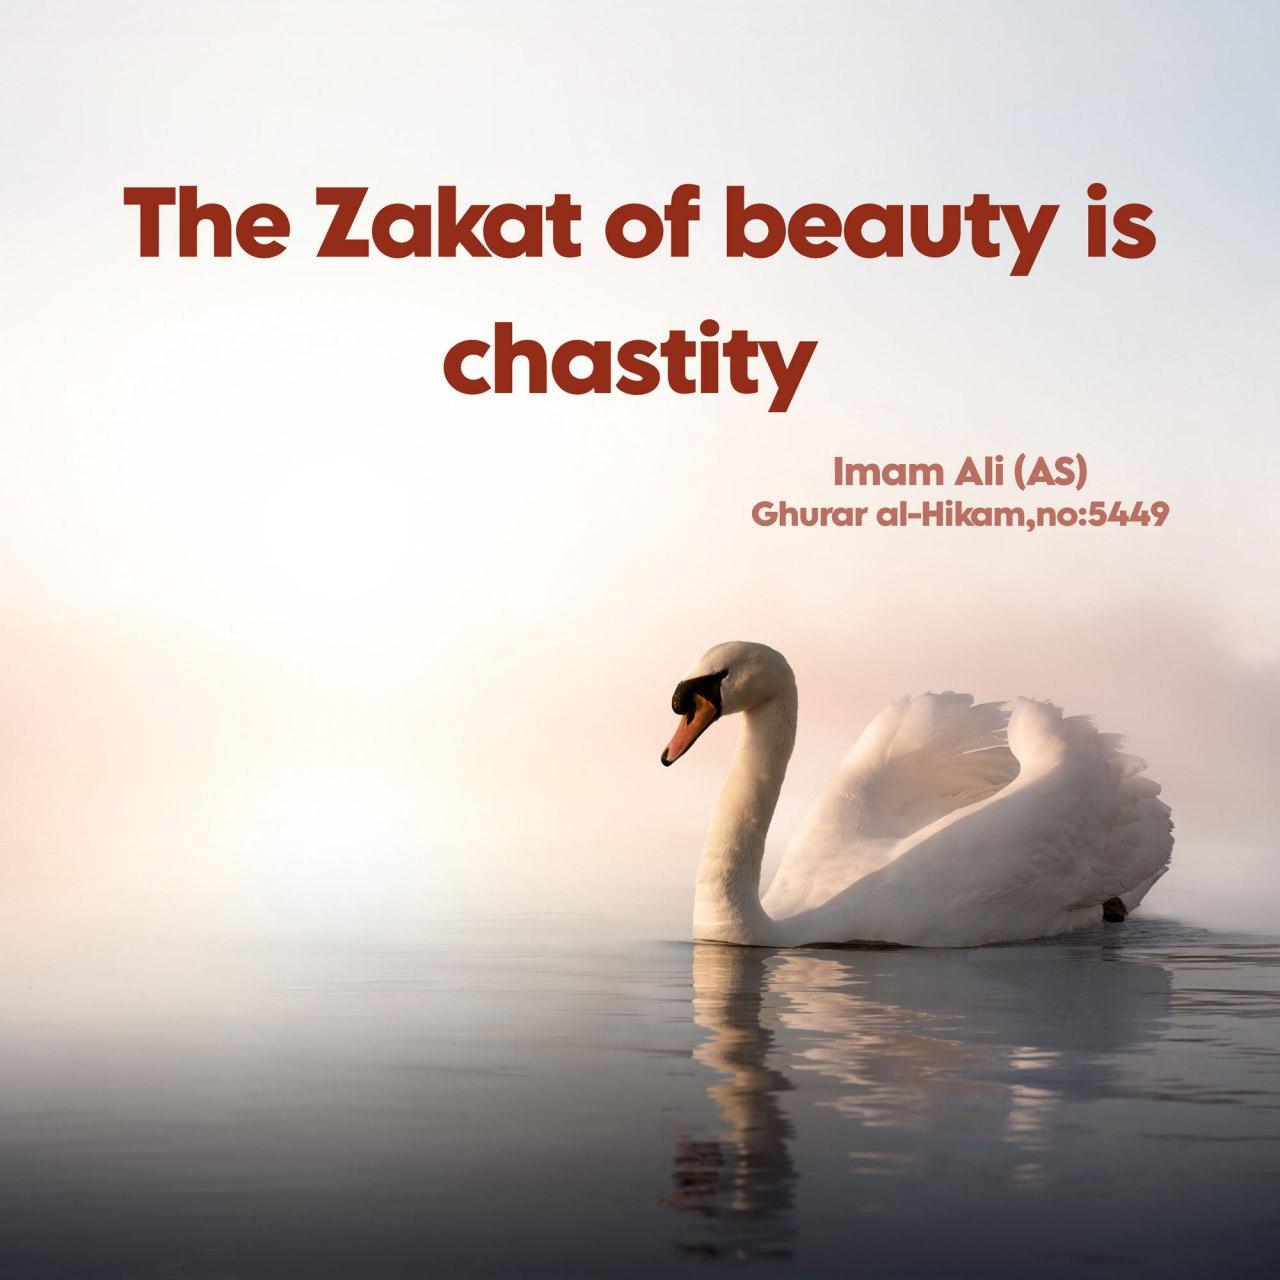 The Zakat of beauty